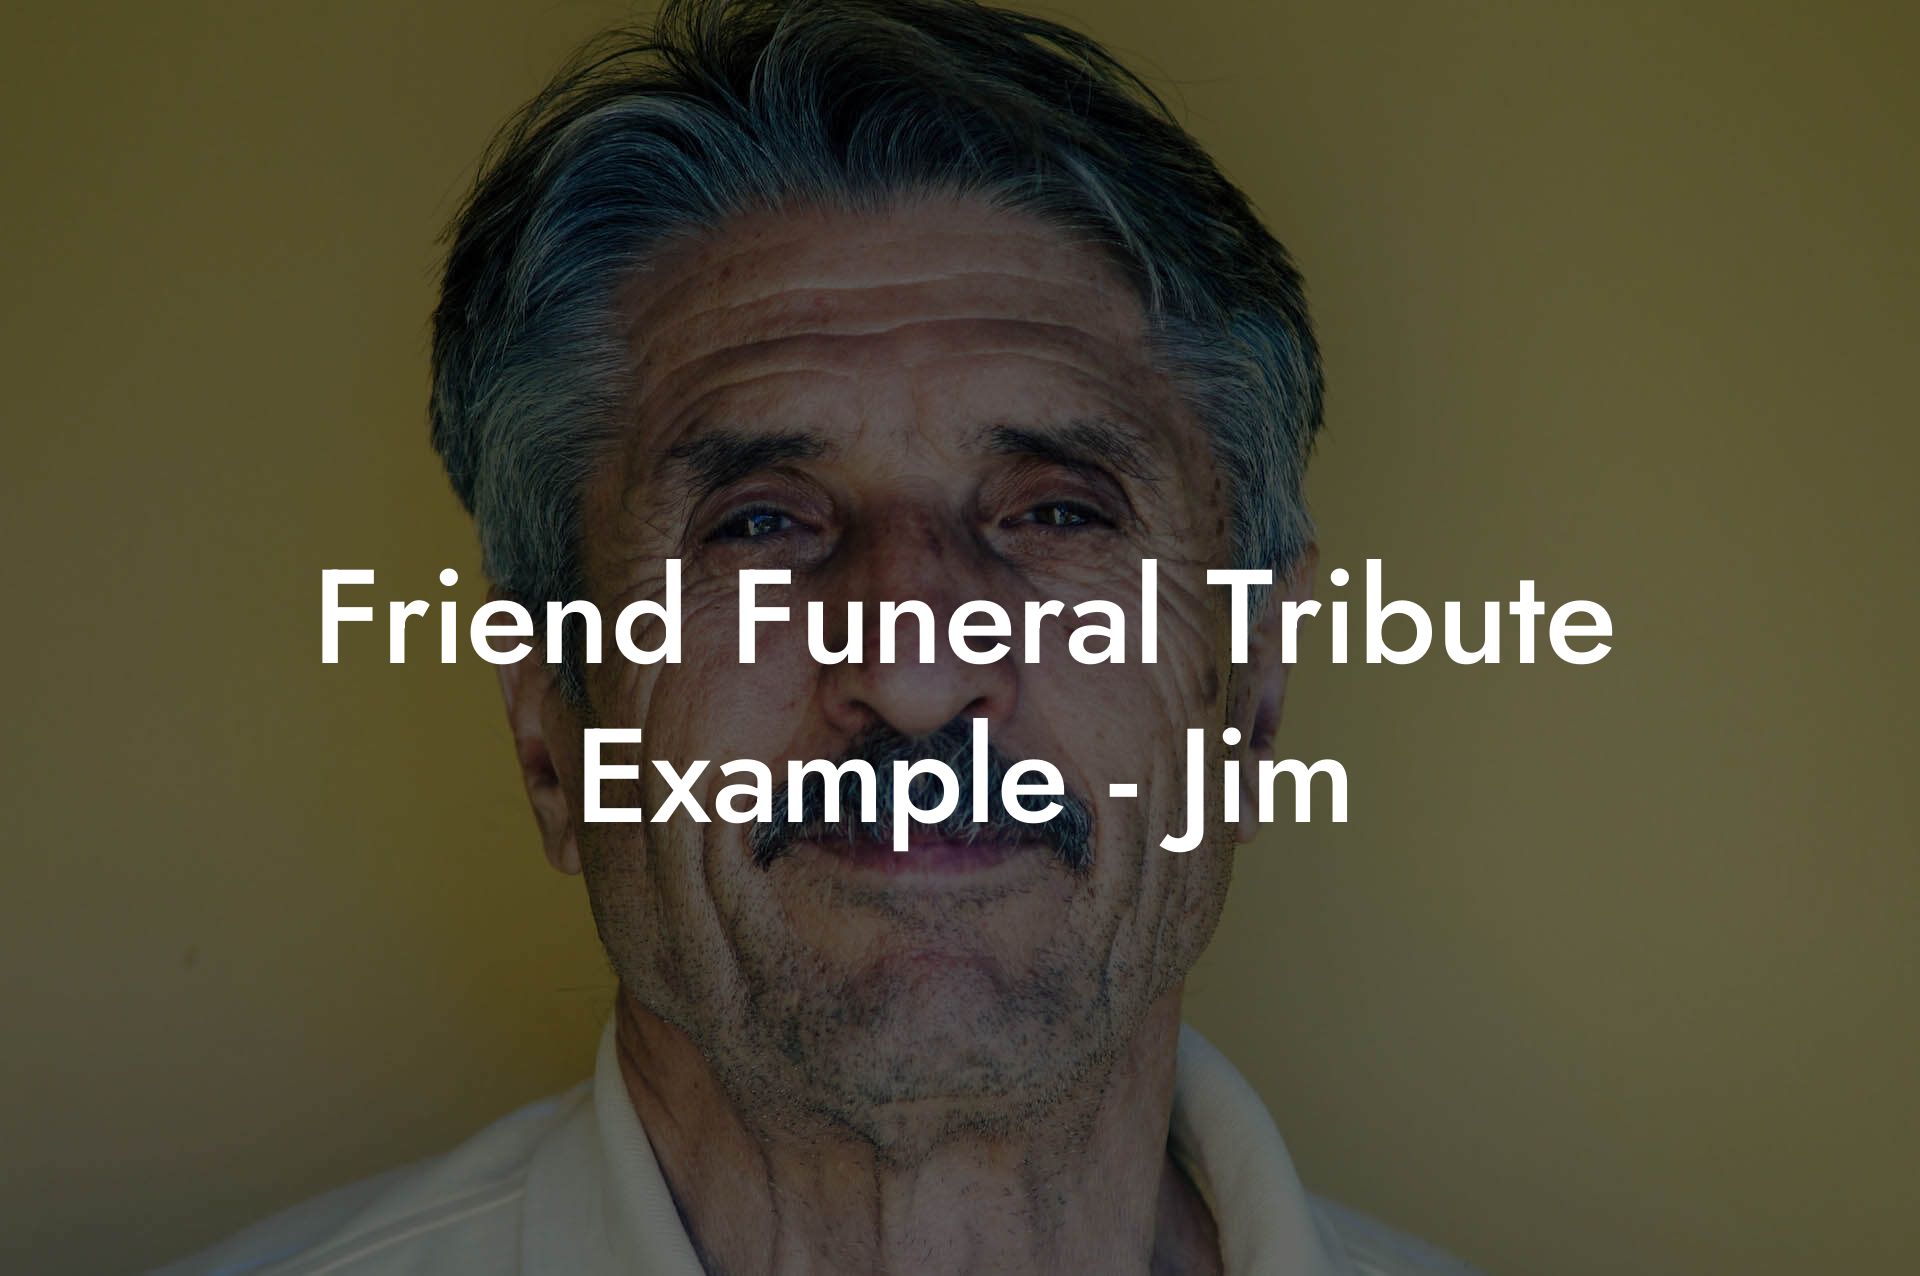 Friend Funeral Tribute Example - Jim